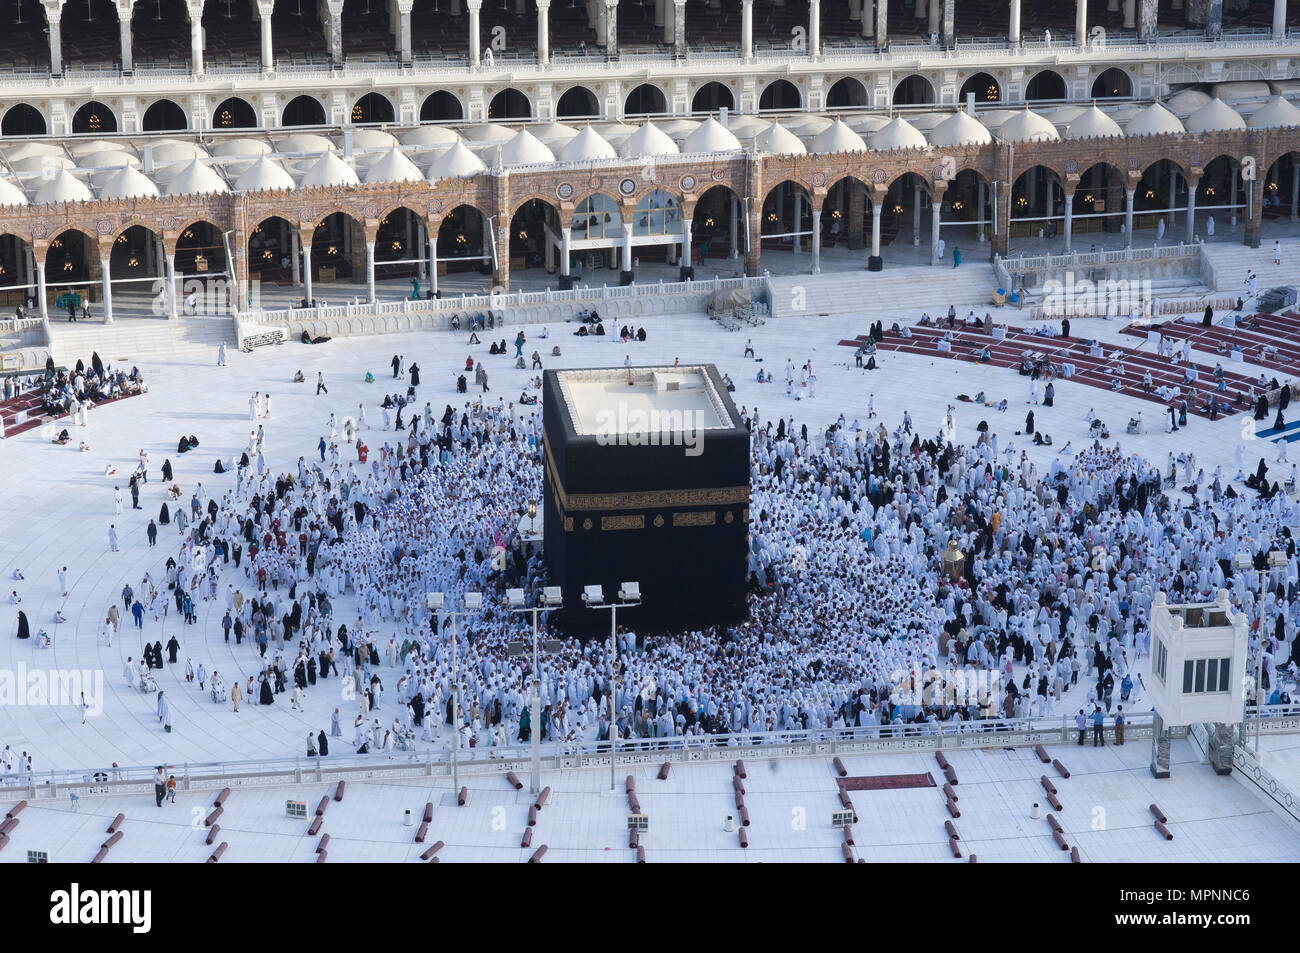 Prayer and Tawaf of Muslims Around AlKaaba in Mecca, Saudi Arabia, Aerial Top View Stock Photo